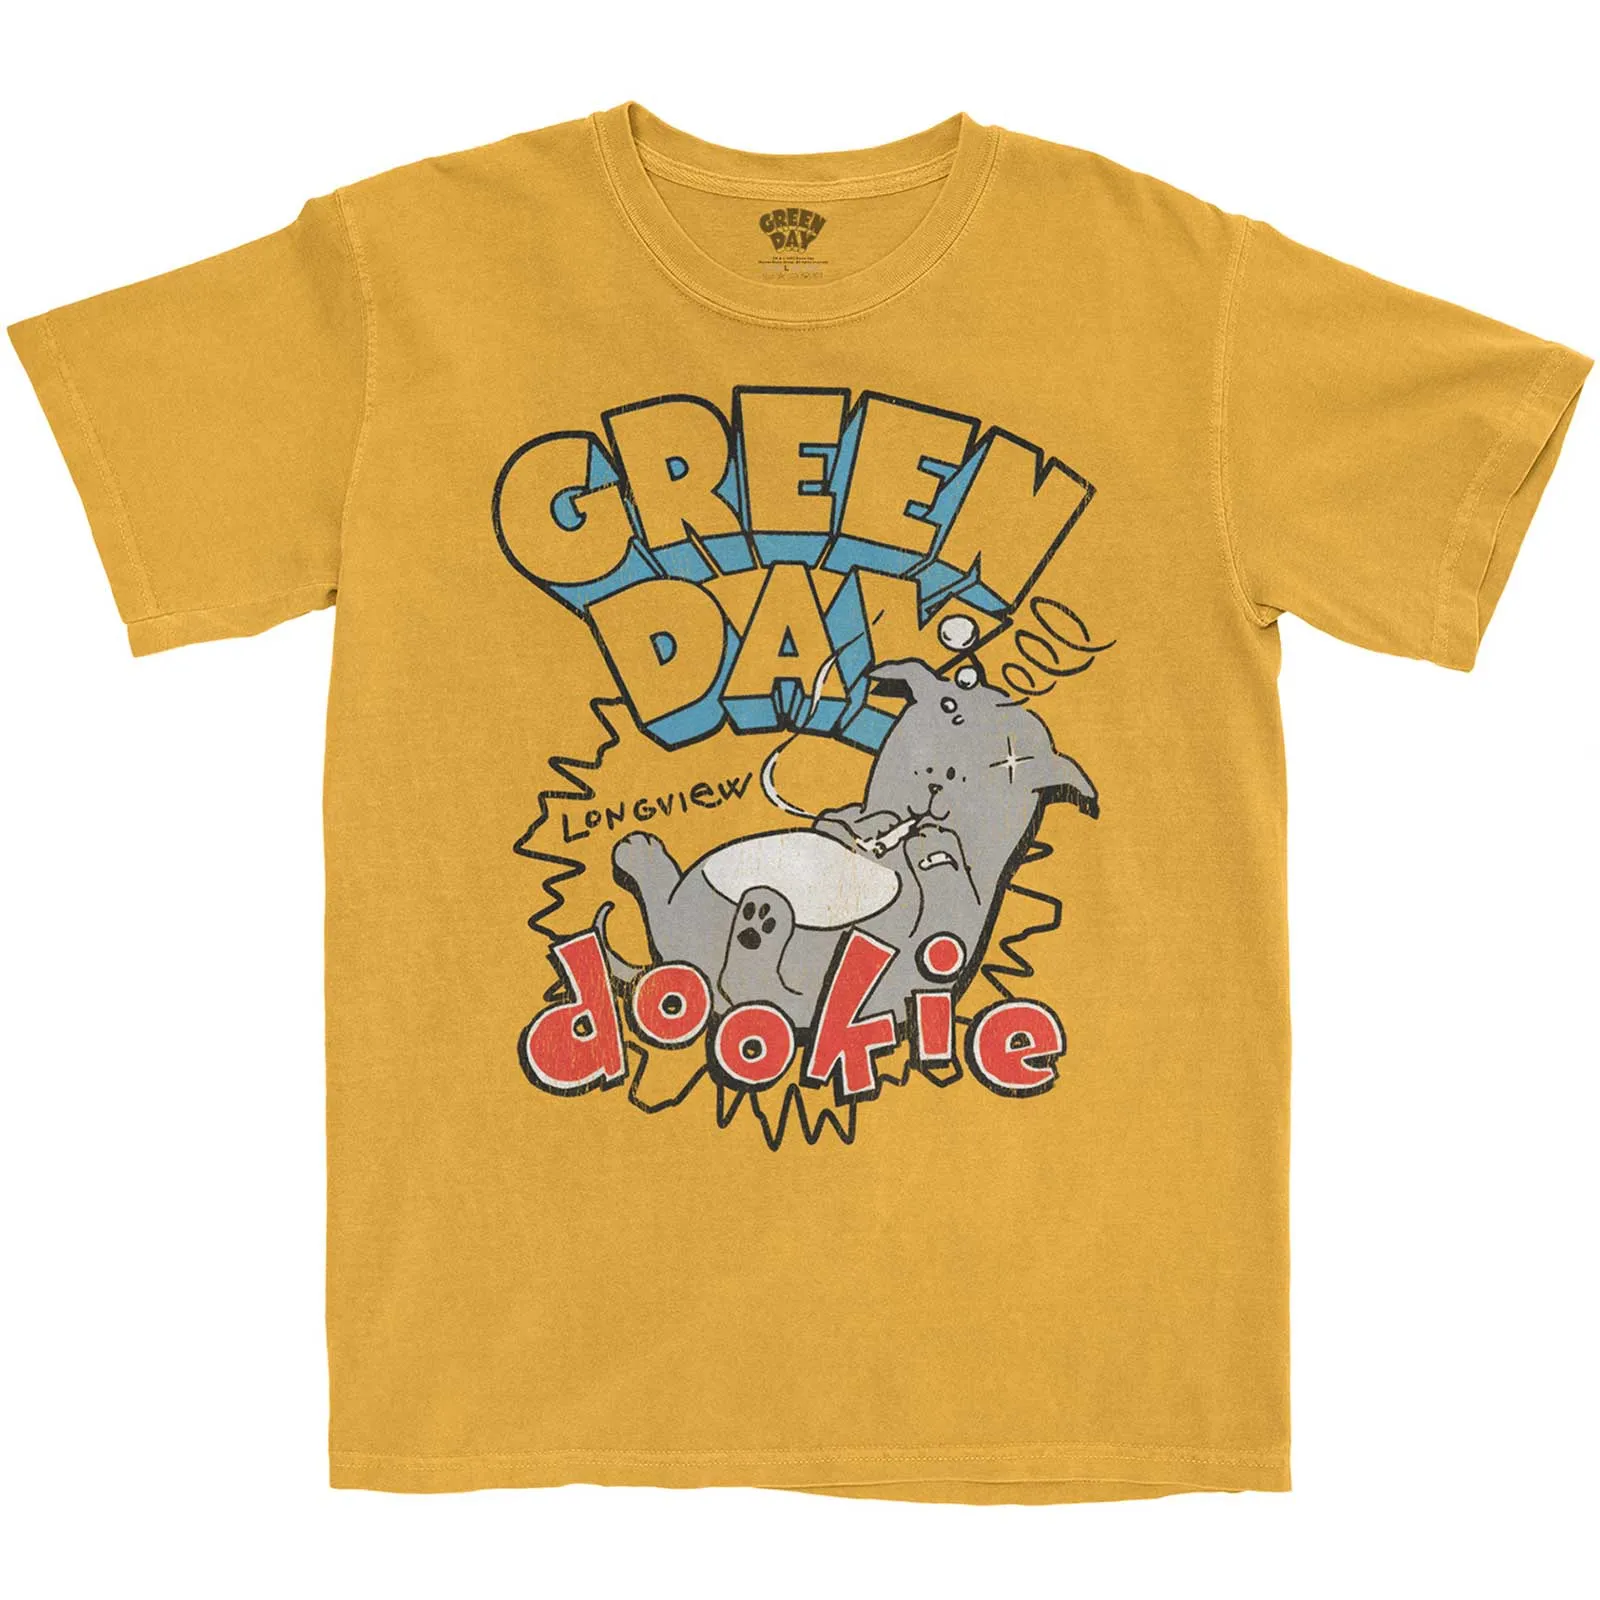 Green Day - Unisex T-Shirt Dookie Longview artwork